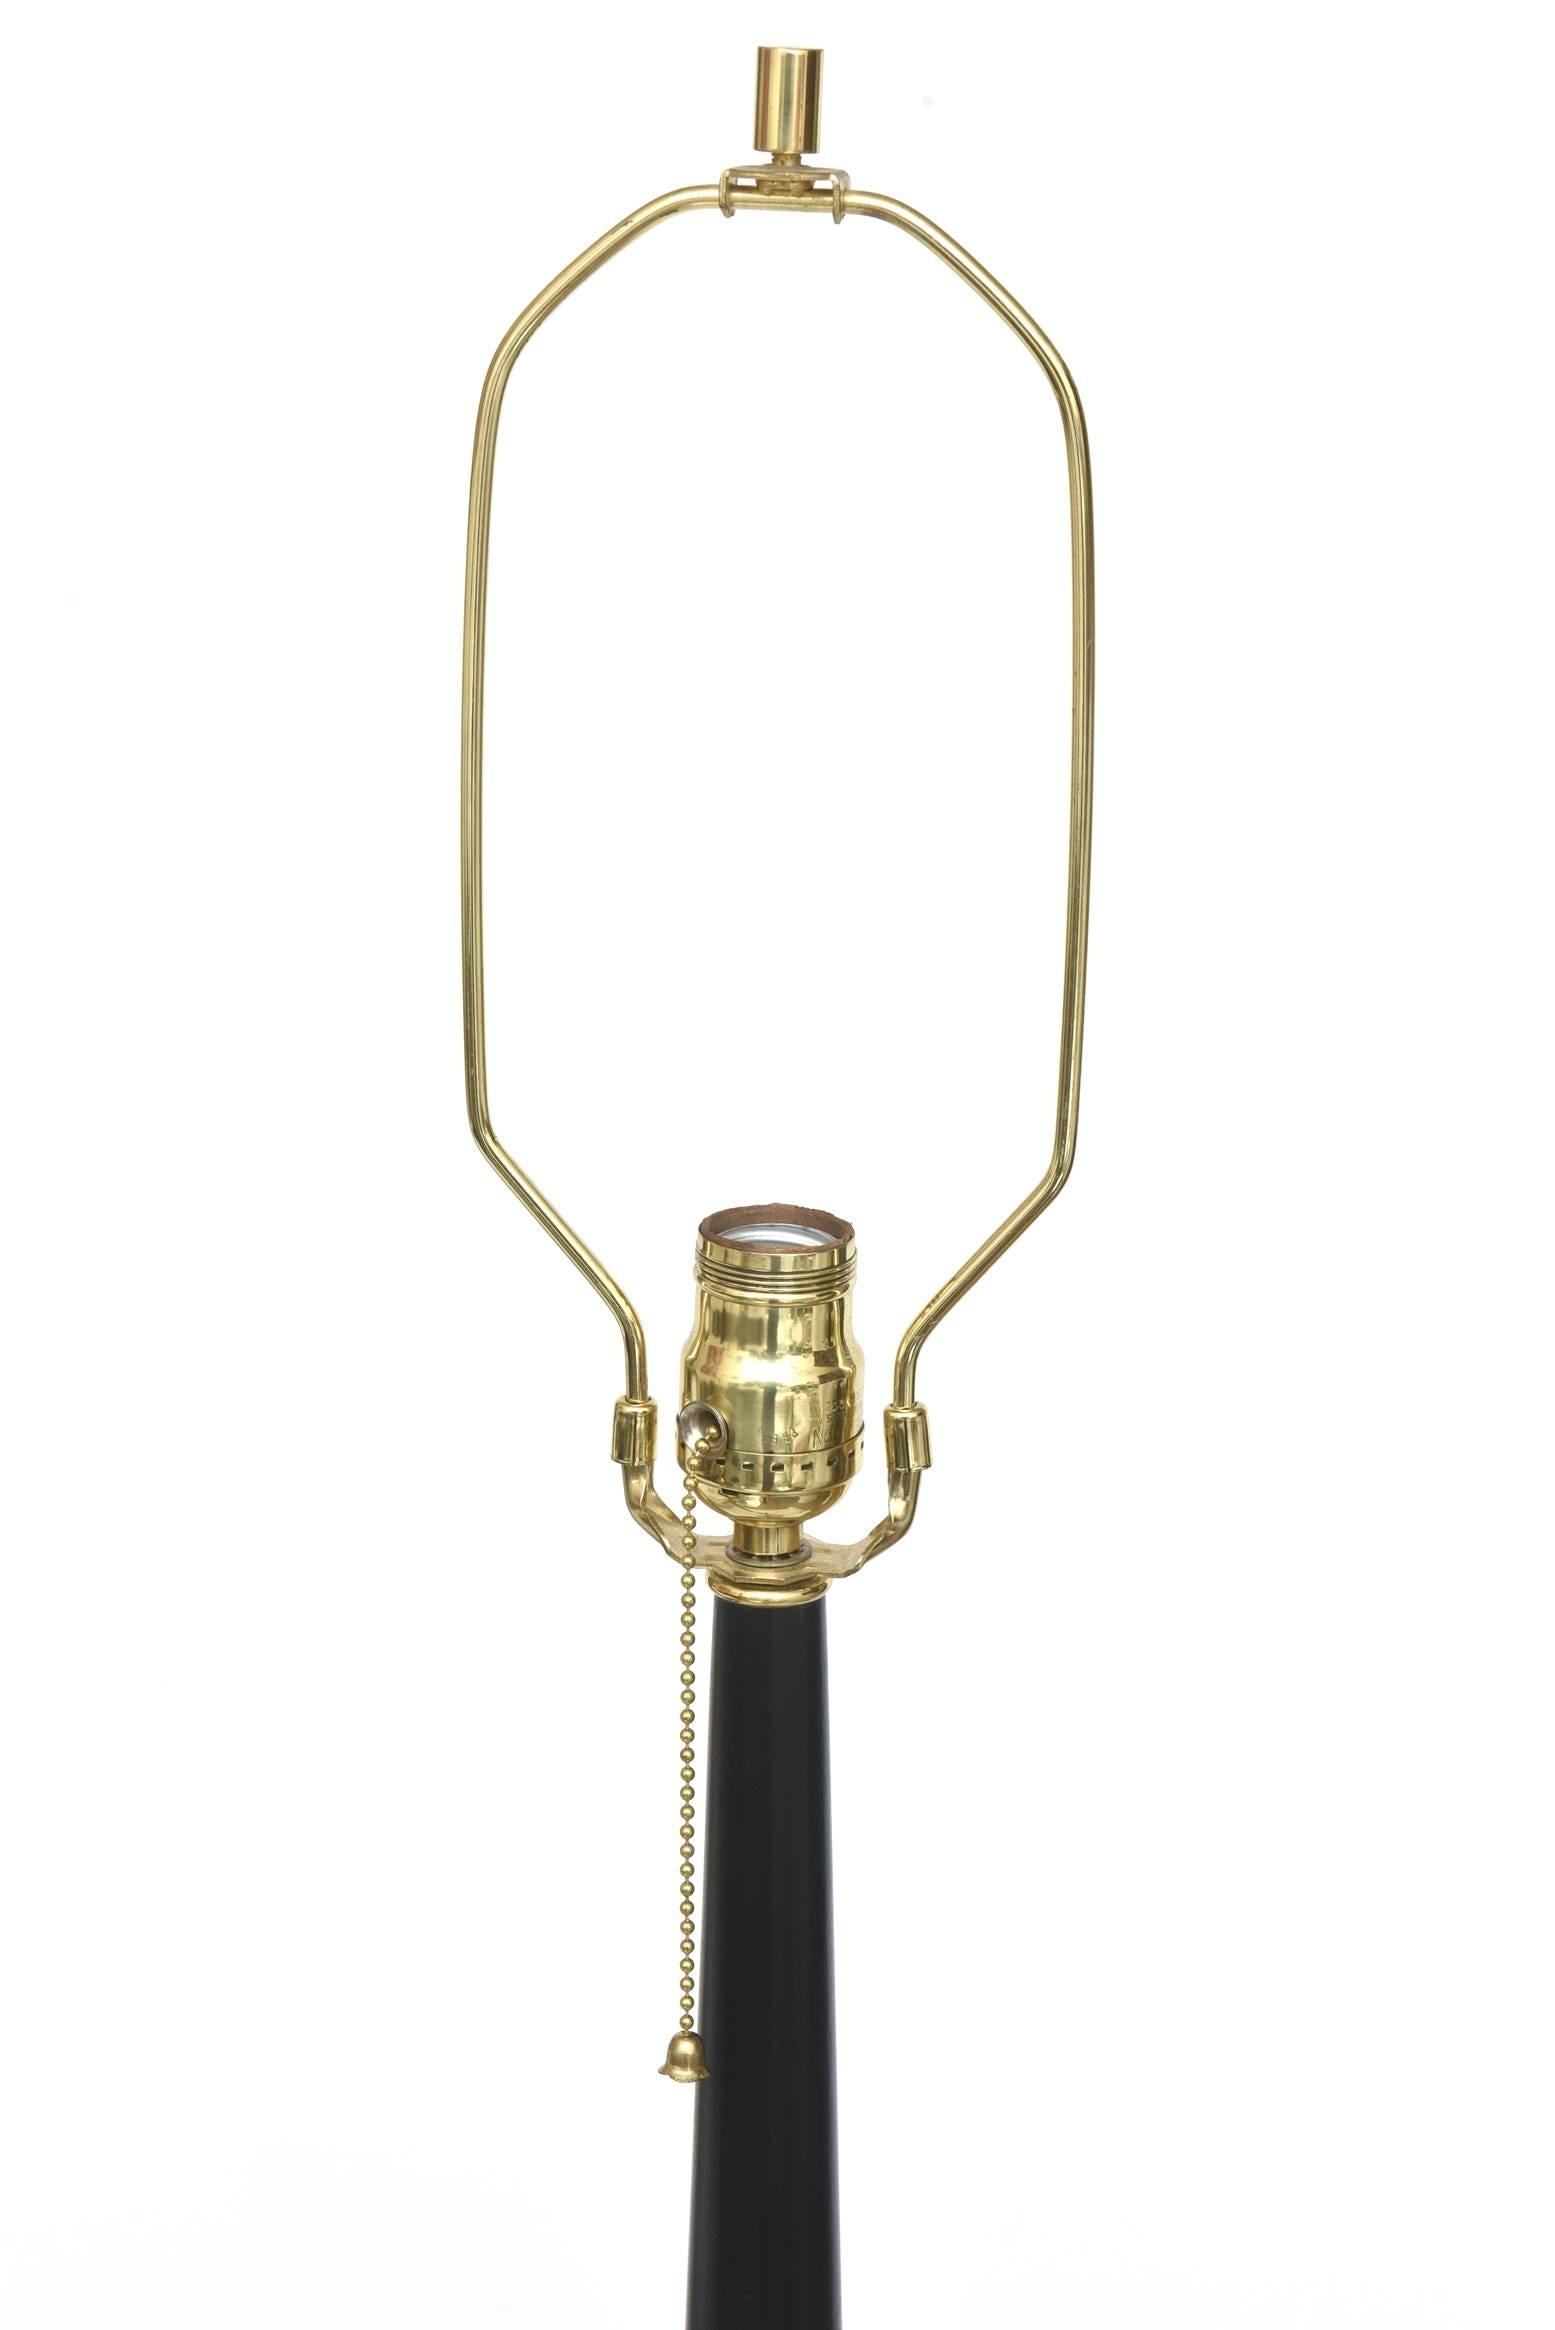 Brass Tommi Parzinger Tripod Table Floor Lamp Mid-Century Modern